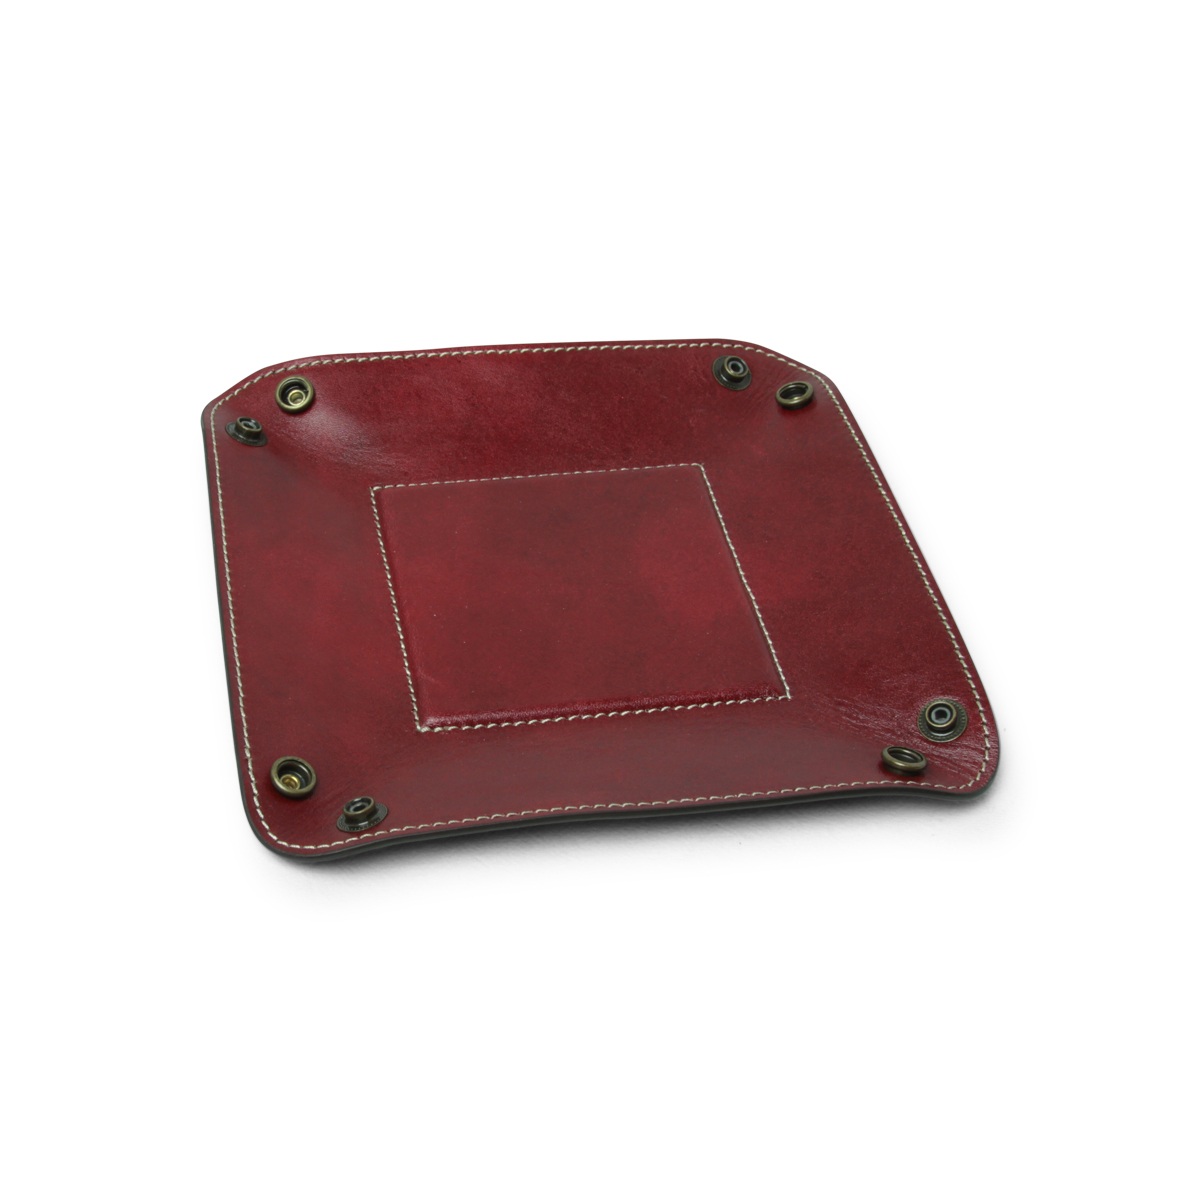 Full grain leather valet tray - red|755589RO|Old Angler Firenze